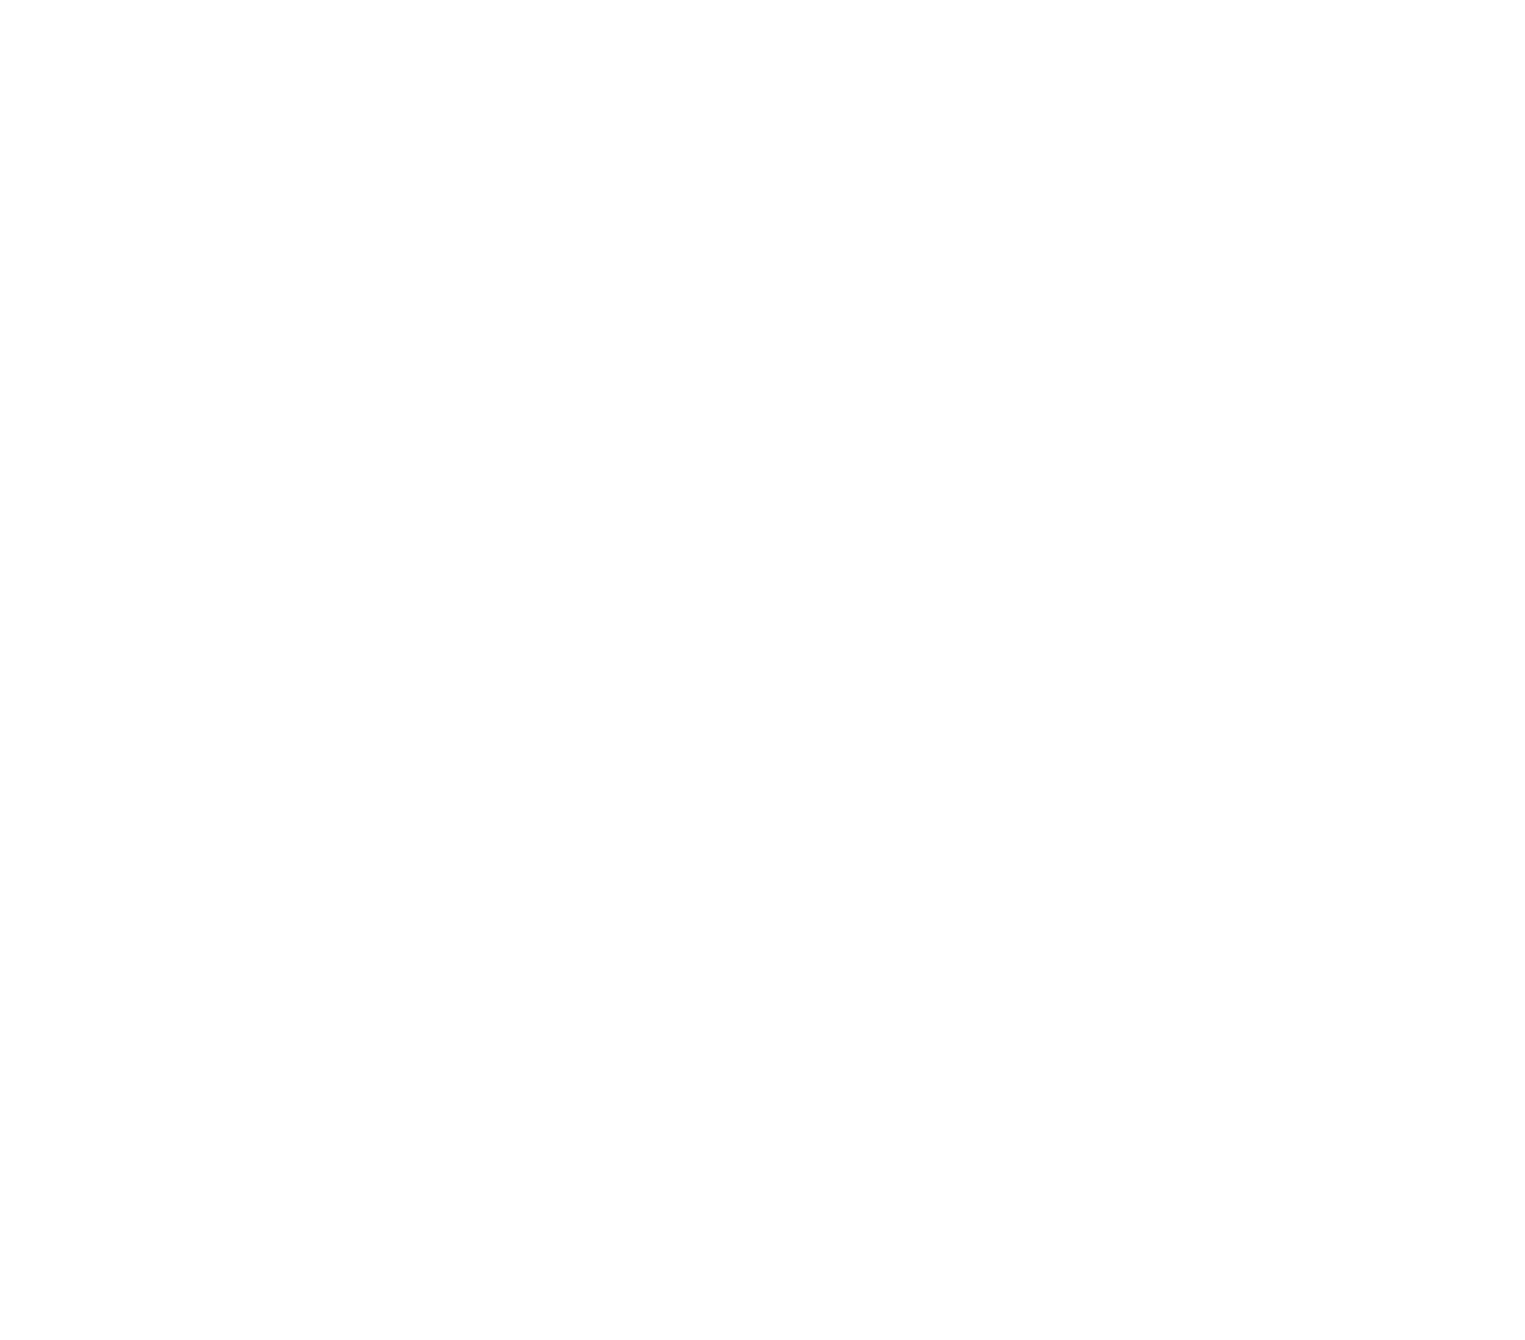 Alpha Metallurgical Resources logo for dark backgrounds (transparent PNG)